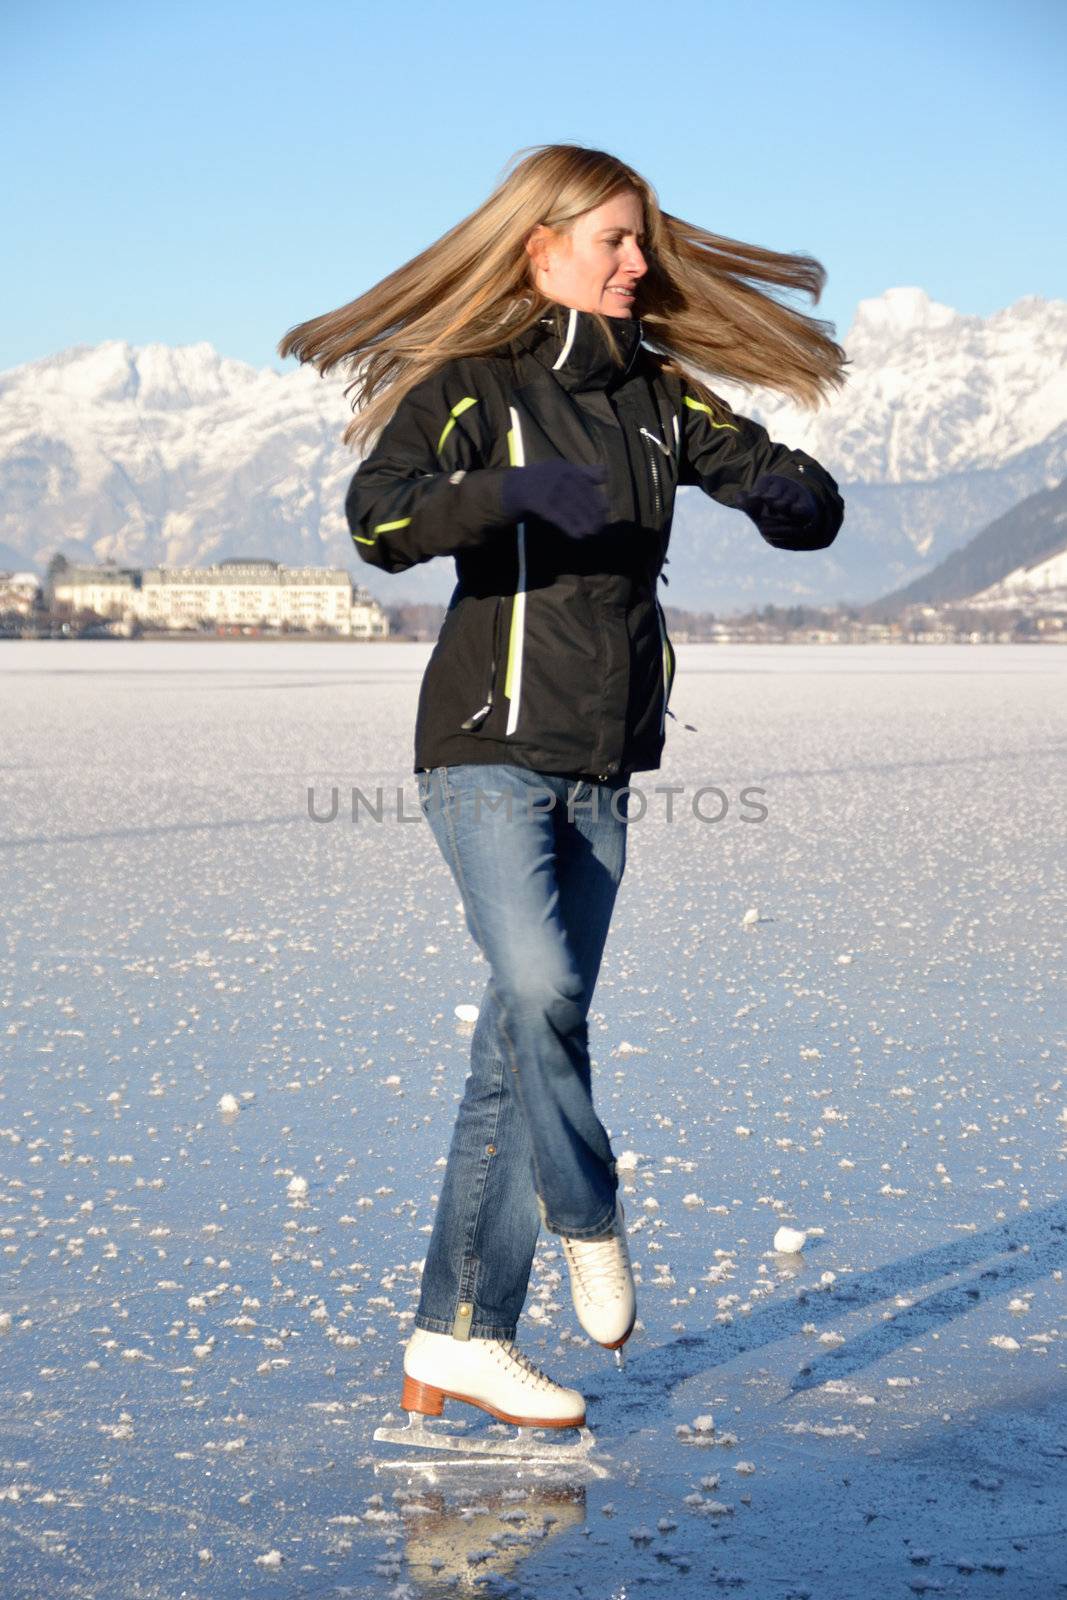 Woman figure skating by fahrner